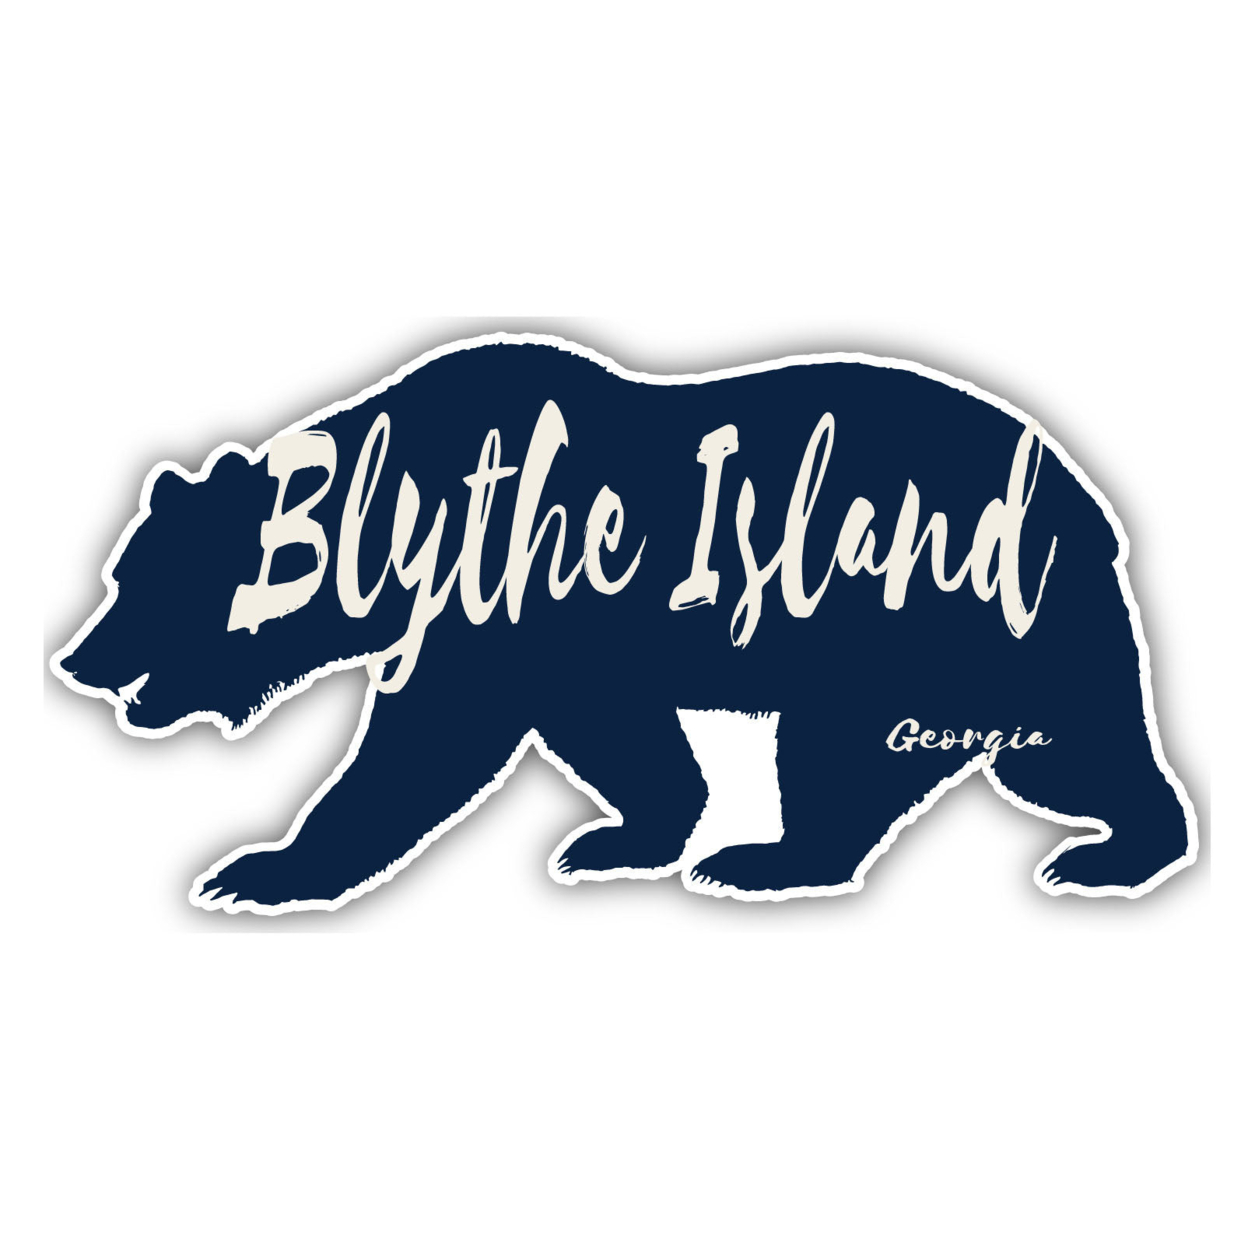 Blythe Island Georgia Souvenir Decorative Stickers (Choose Theme And Size) - Single Unit, 6-Inch, Tent